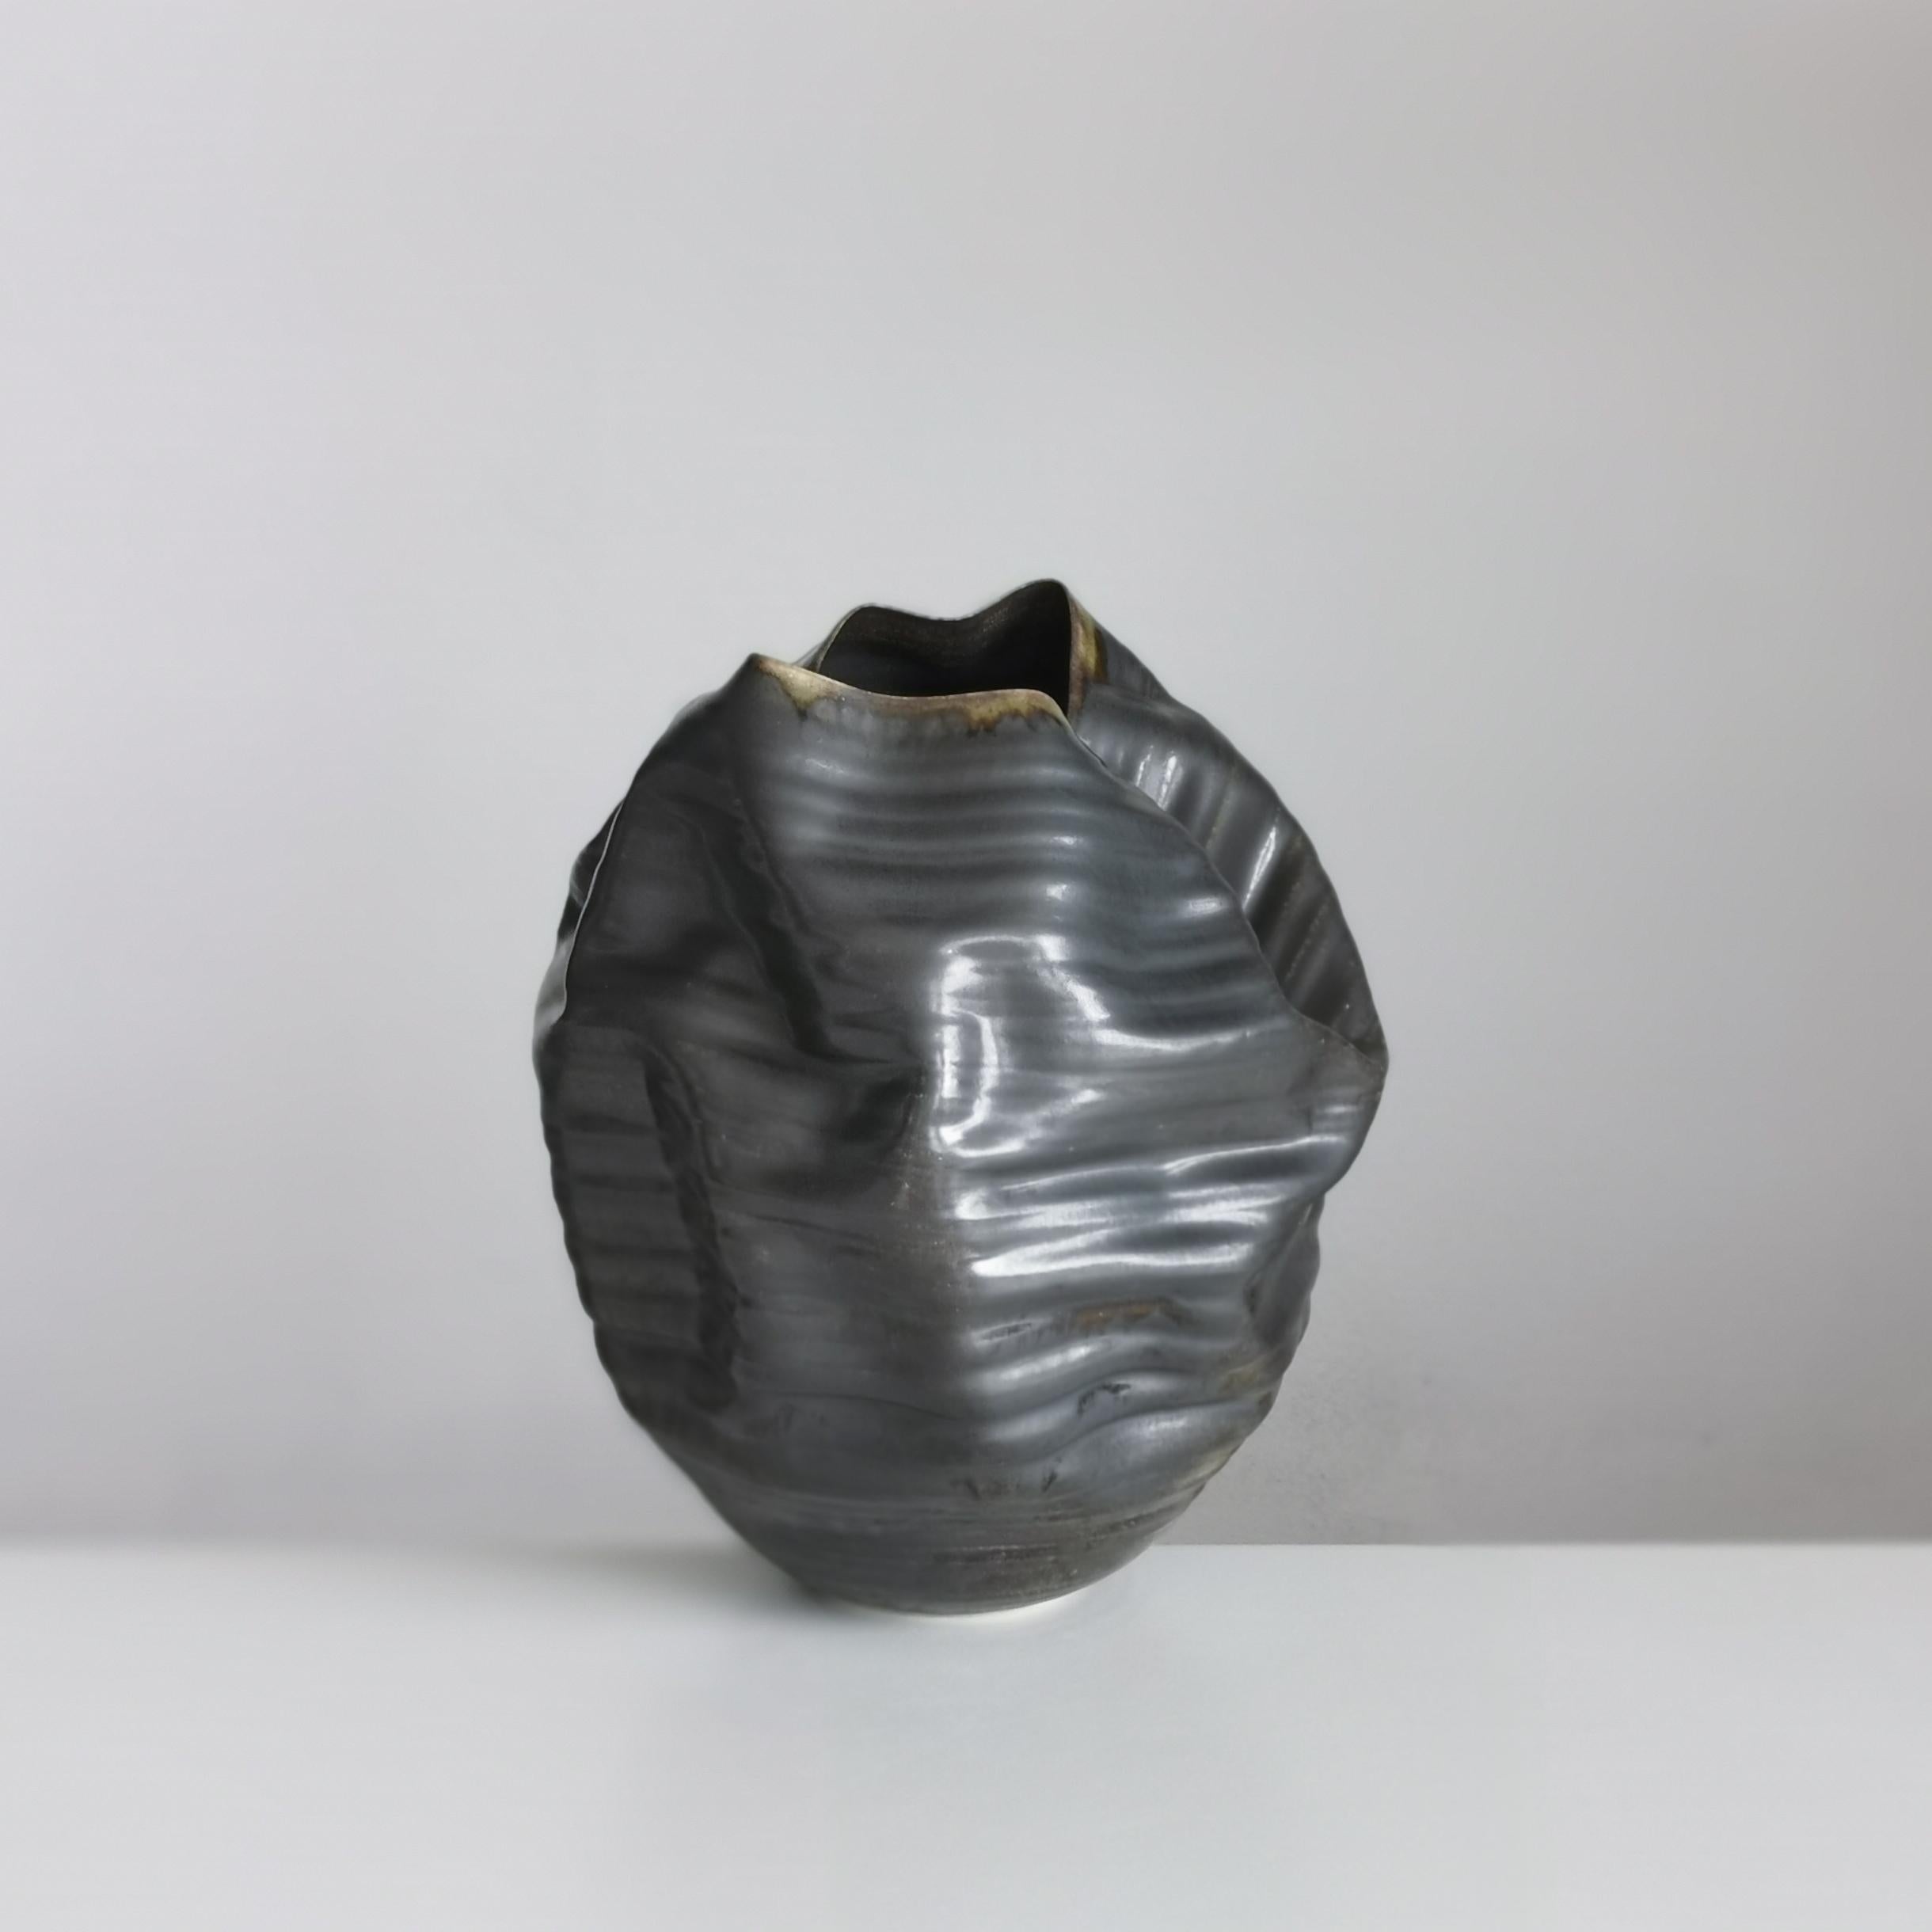 Unique Ceramic Sculpture Vessel N.58, Black Ribbed Undulating Form, Objet d'Art 2